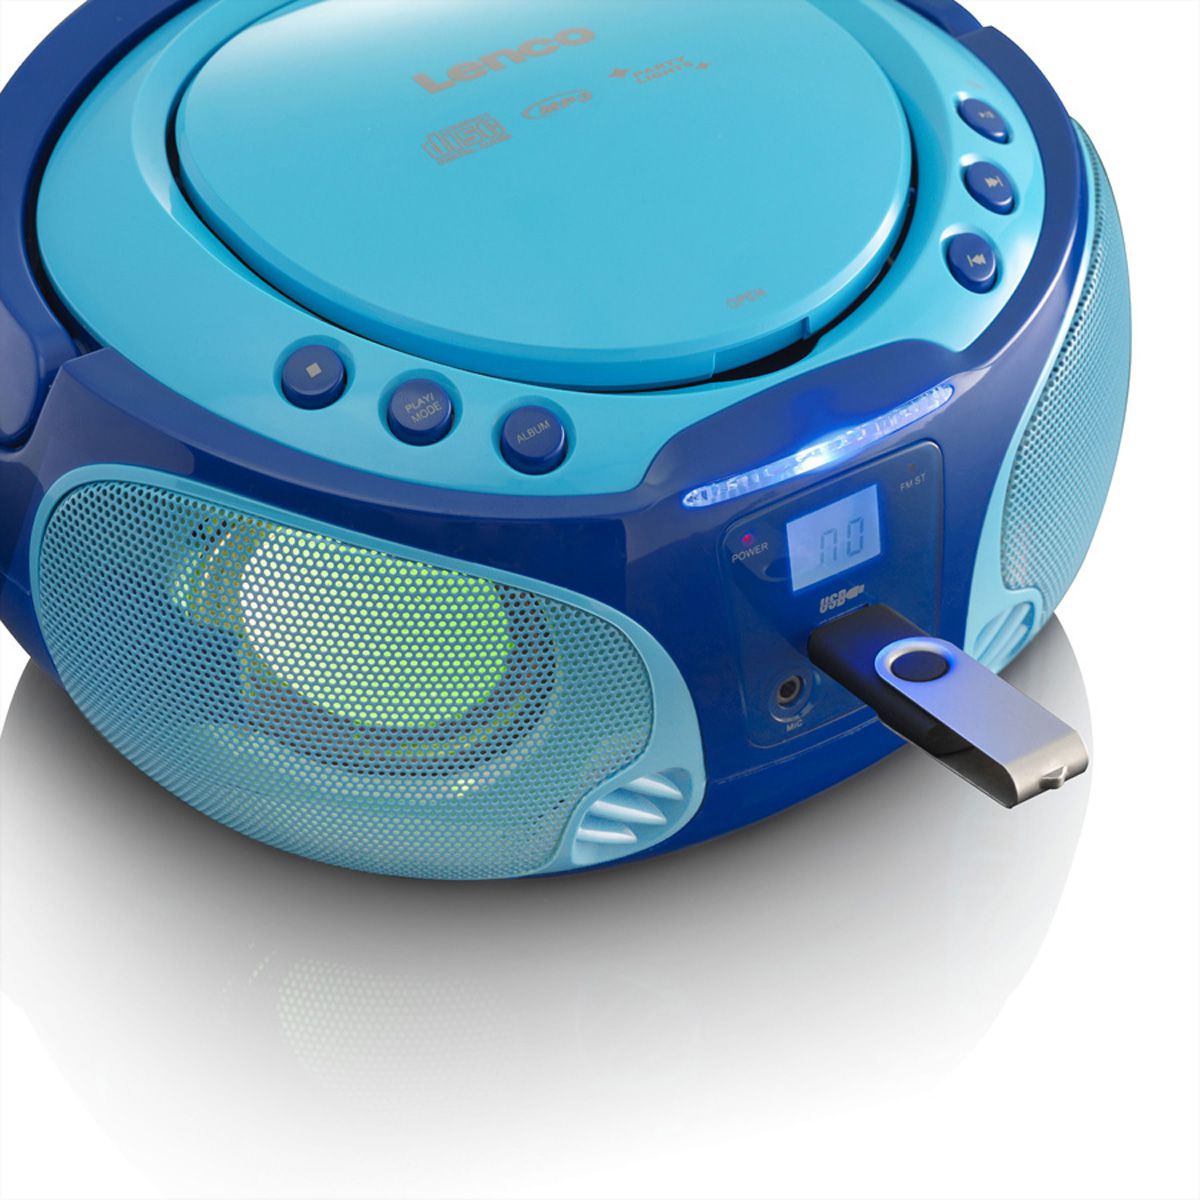 Lenco SCD-41 - Tragbares FM-Radio mit CD/MP3-Player - USB